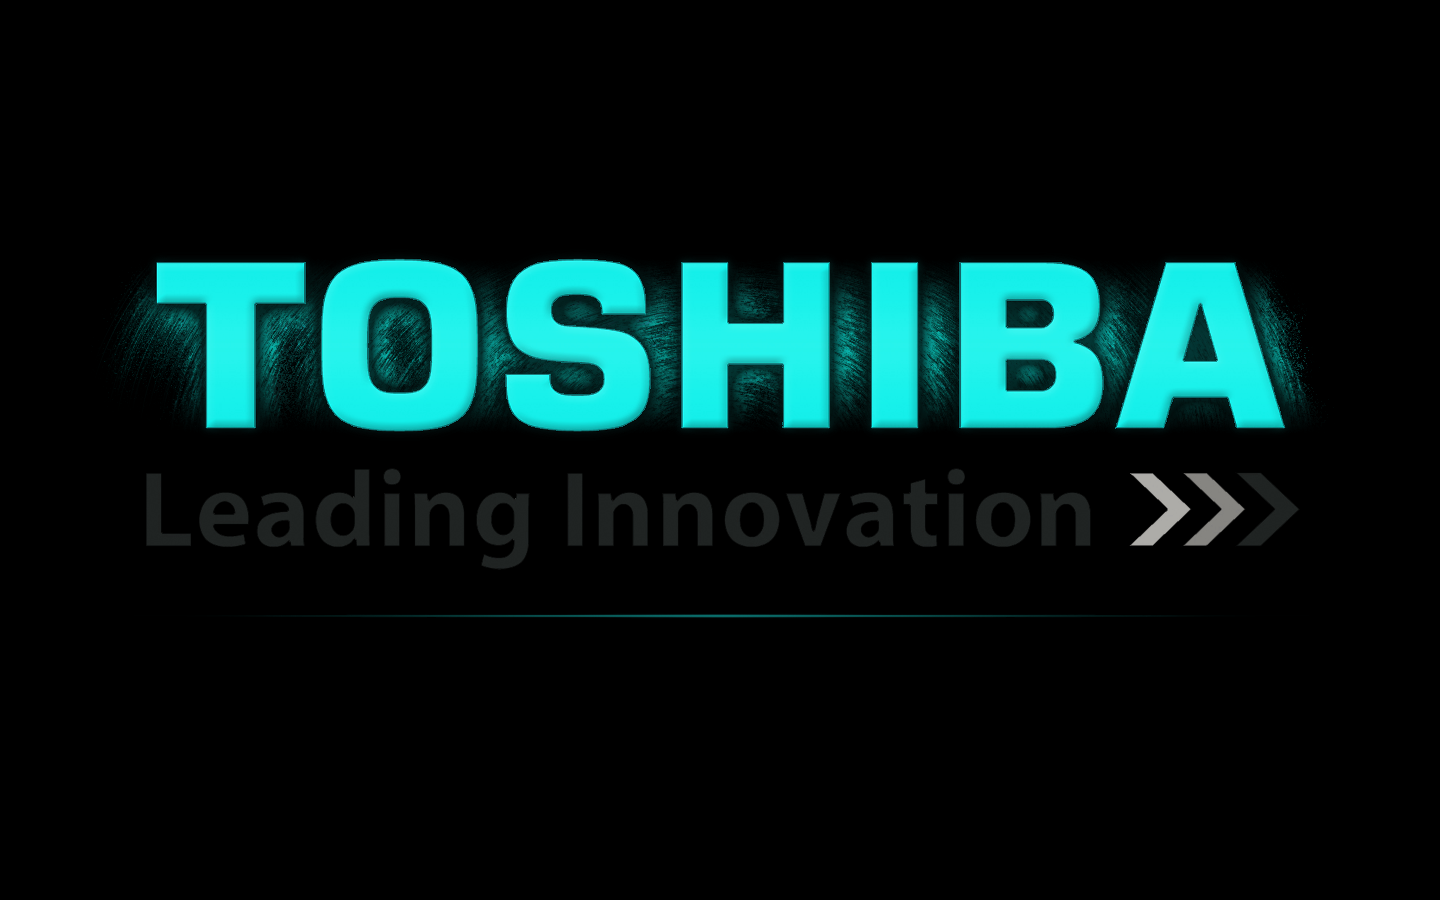 Toshiba Related Image To Zuoda